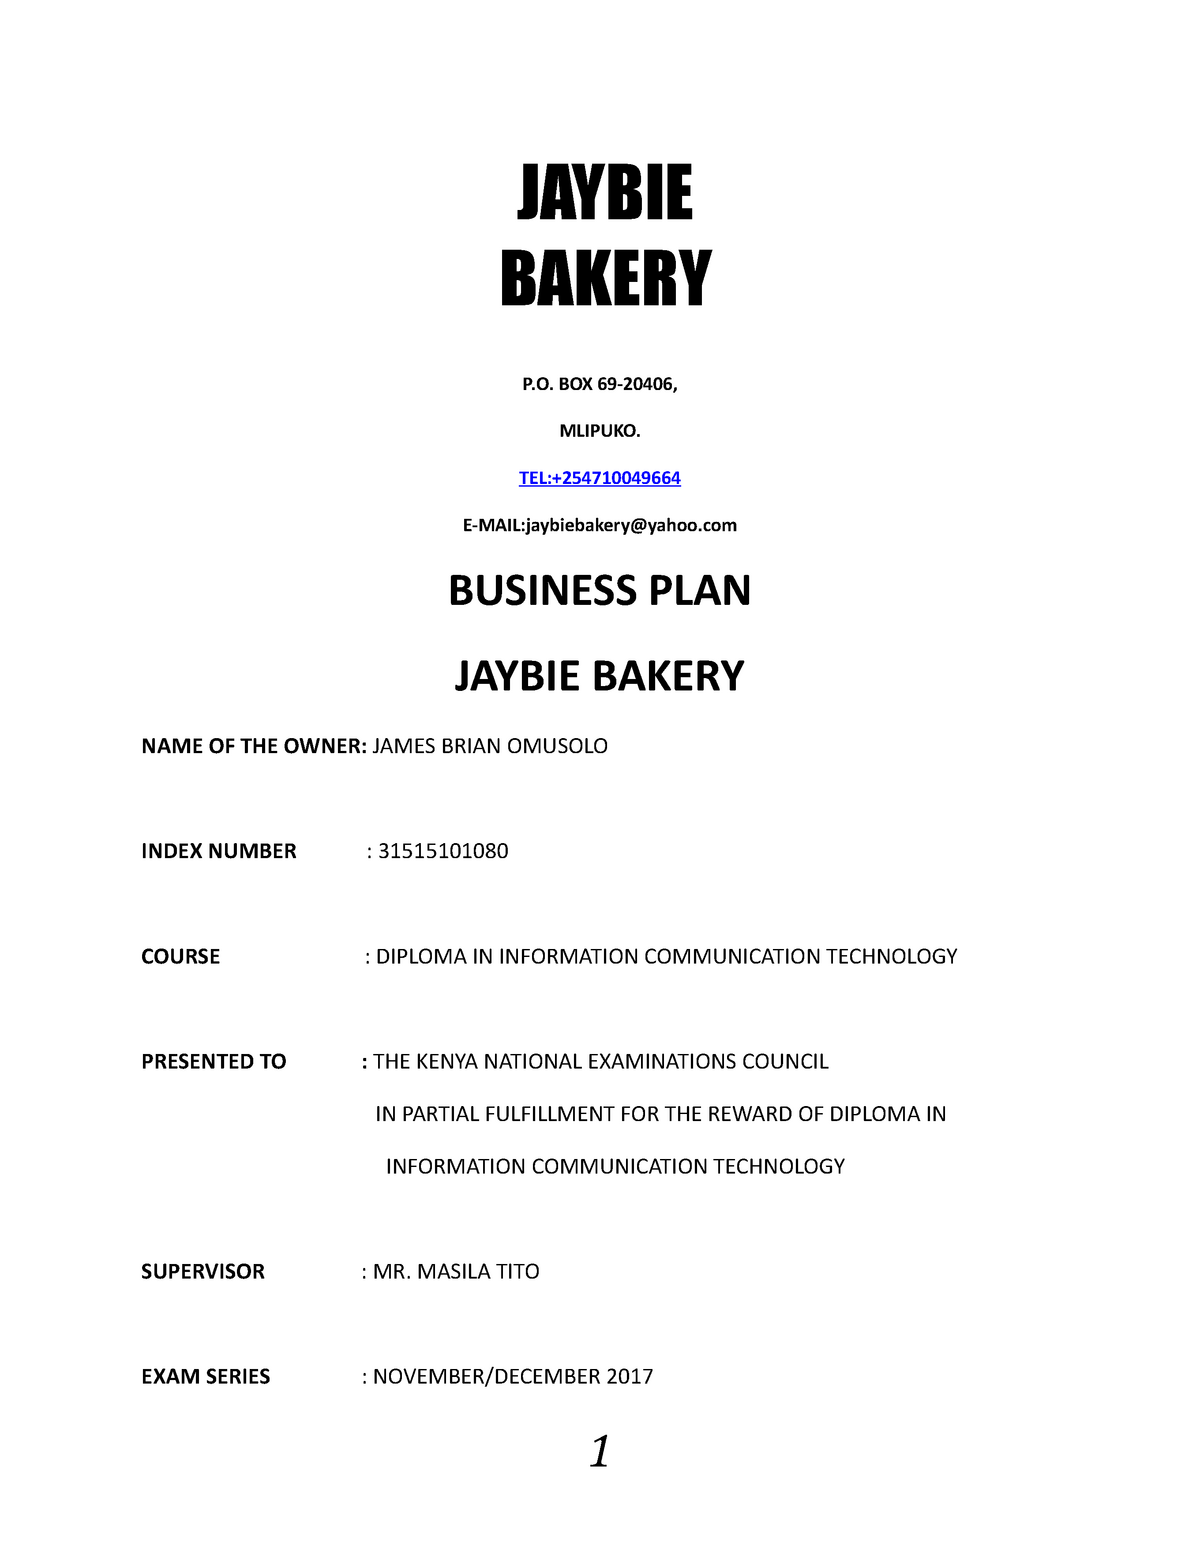 bakery business plan pdf in hindi